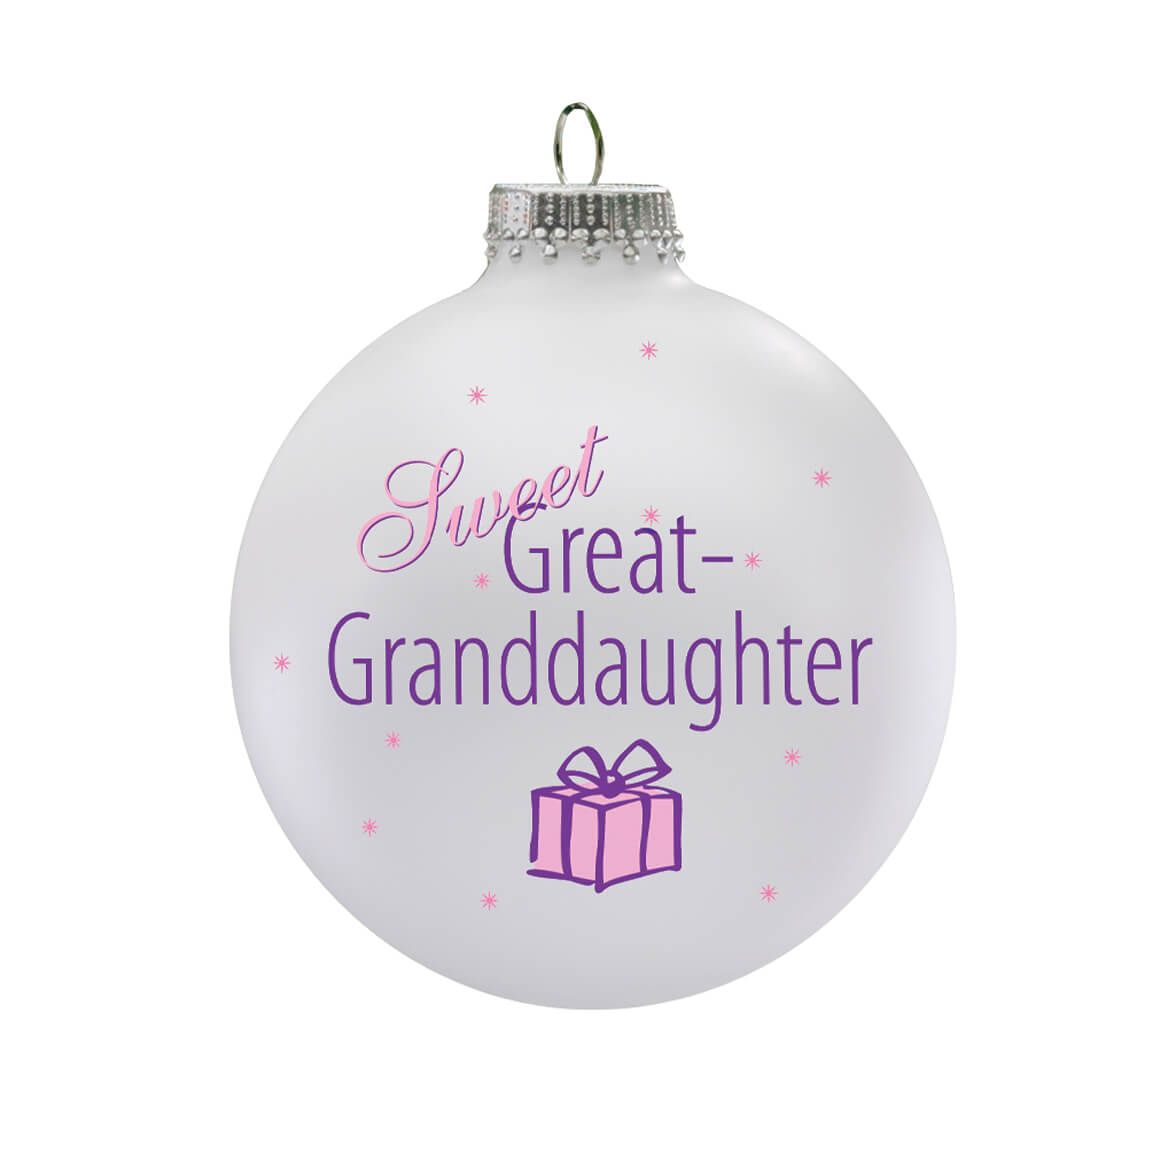 Sweet Great Granddaughter Ball Ornament + '-' + 343090